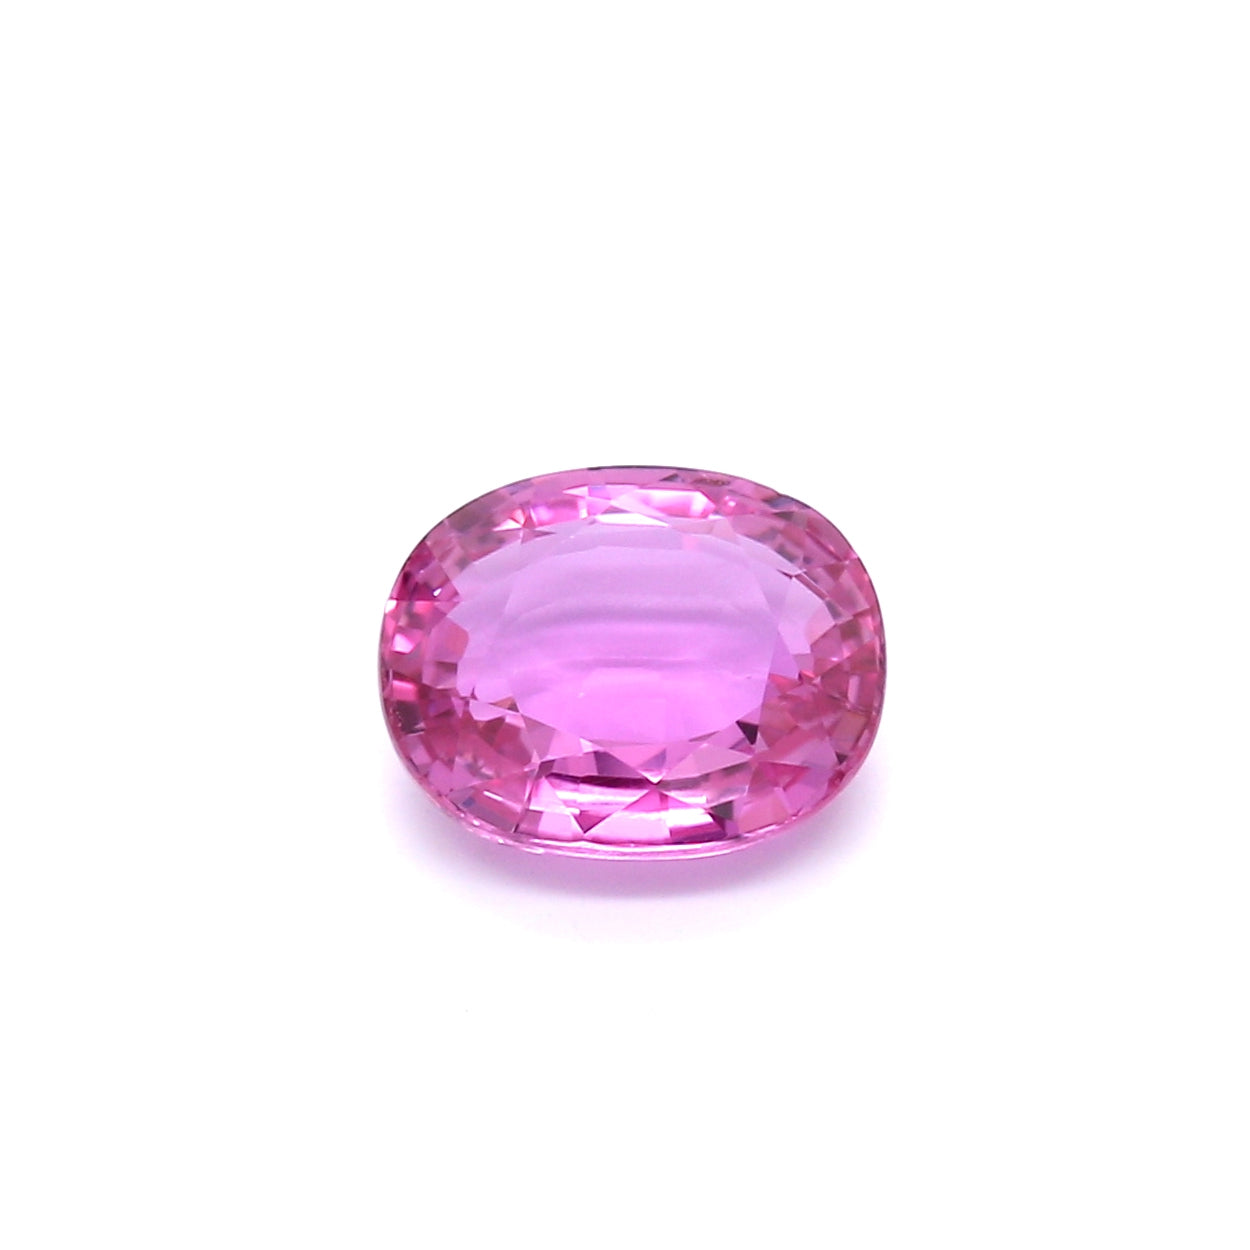 2.49ct Pink, Oval Sapphire, No Heat, Madagascar - 8.88 x 7.31 x 3.64mm